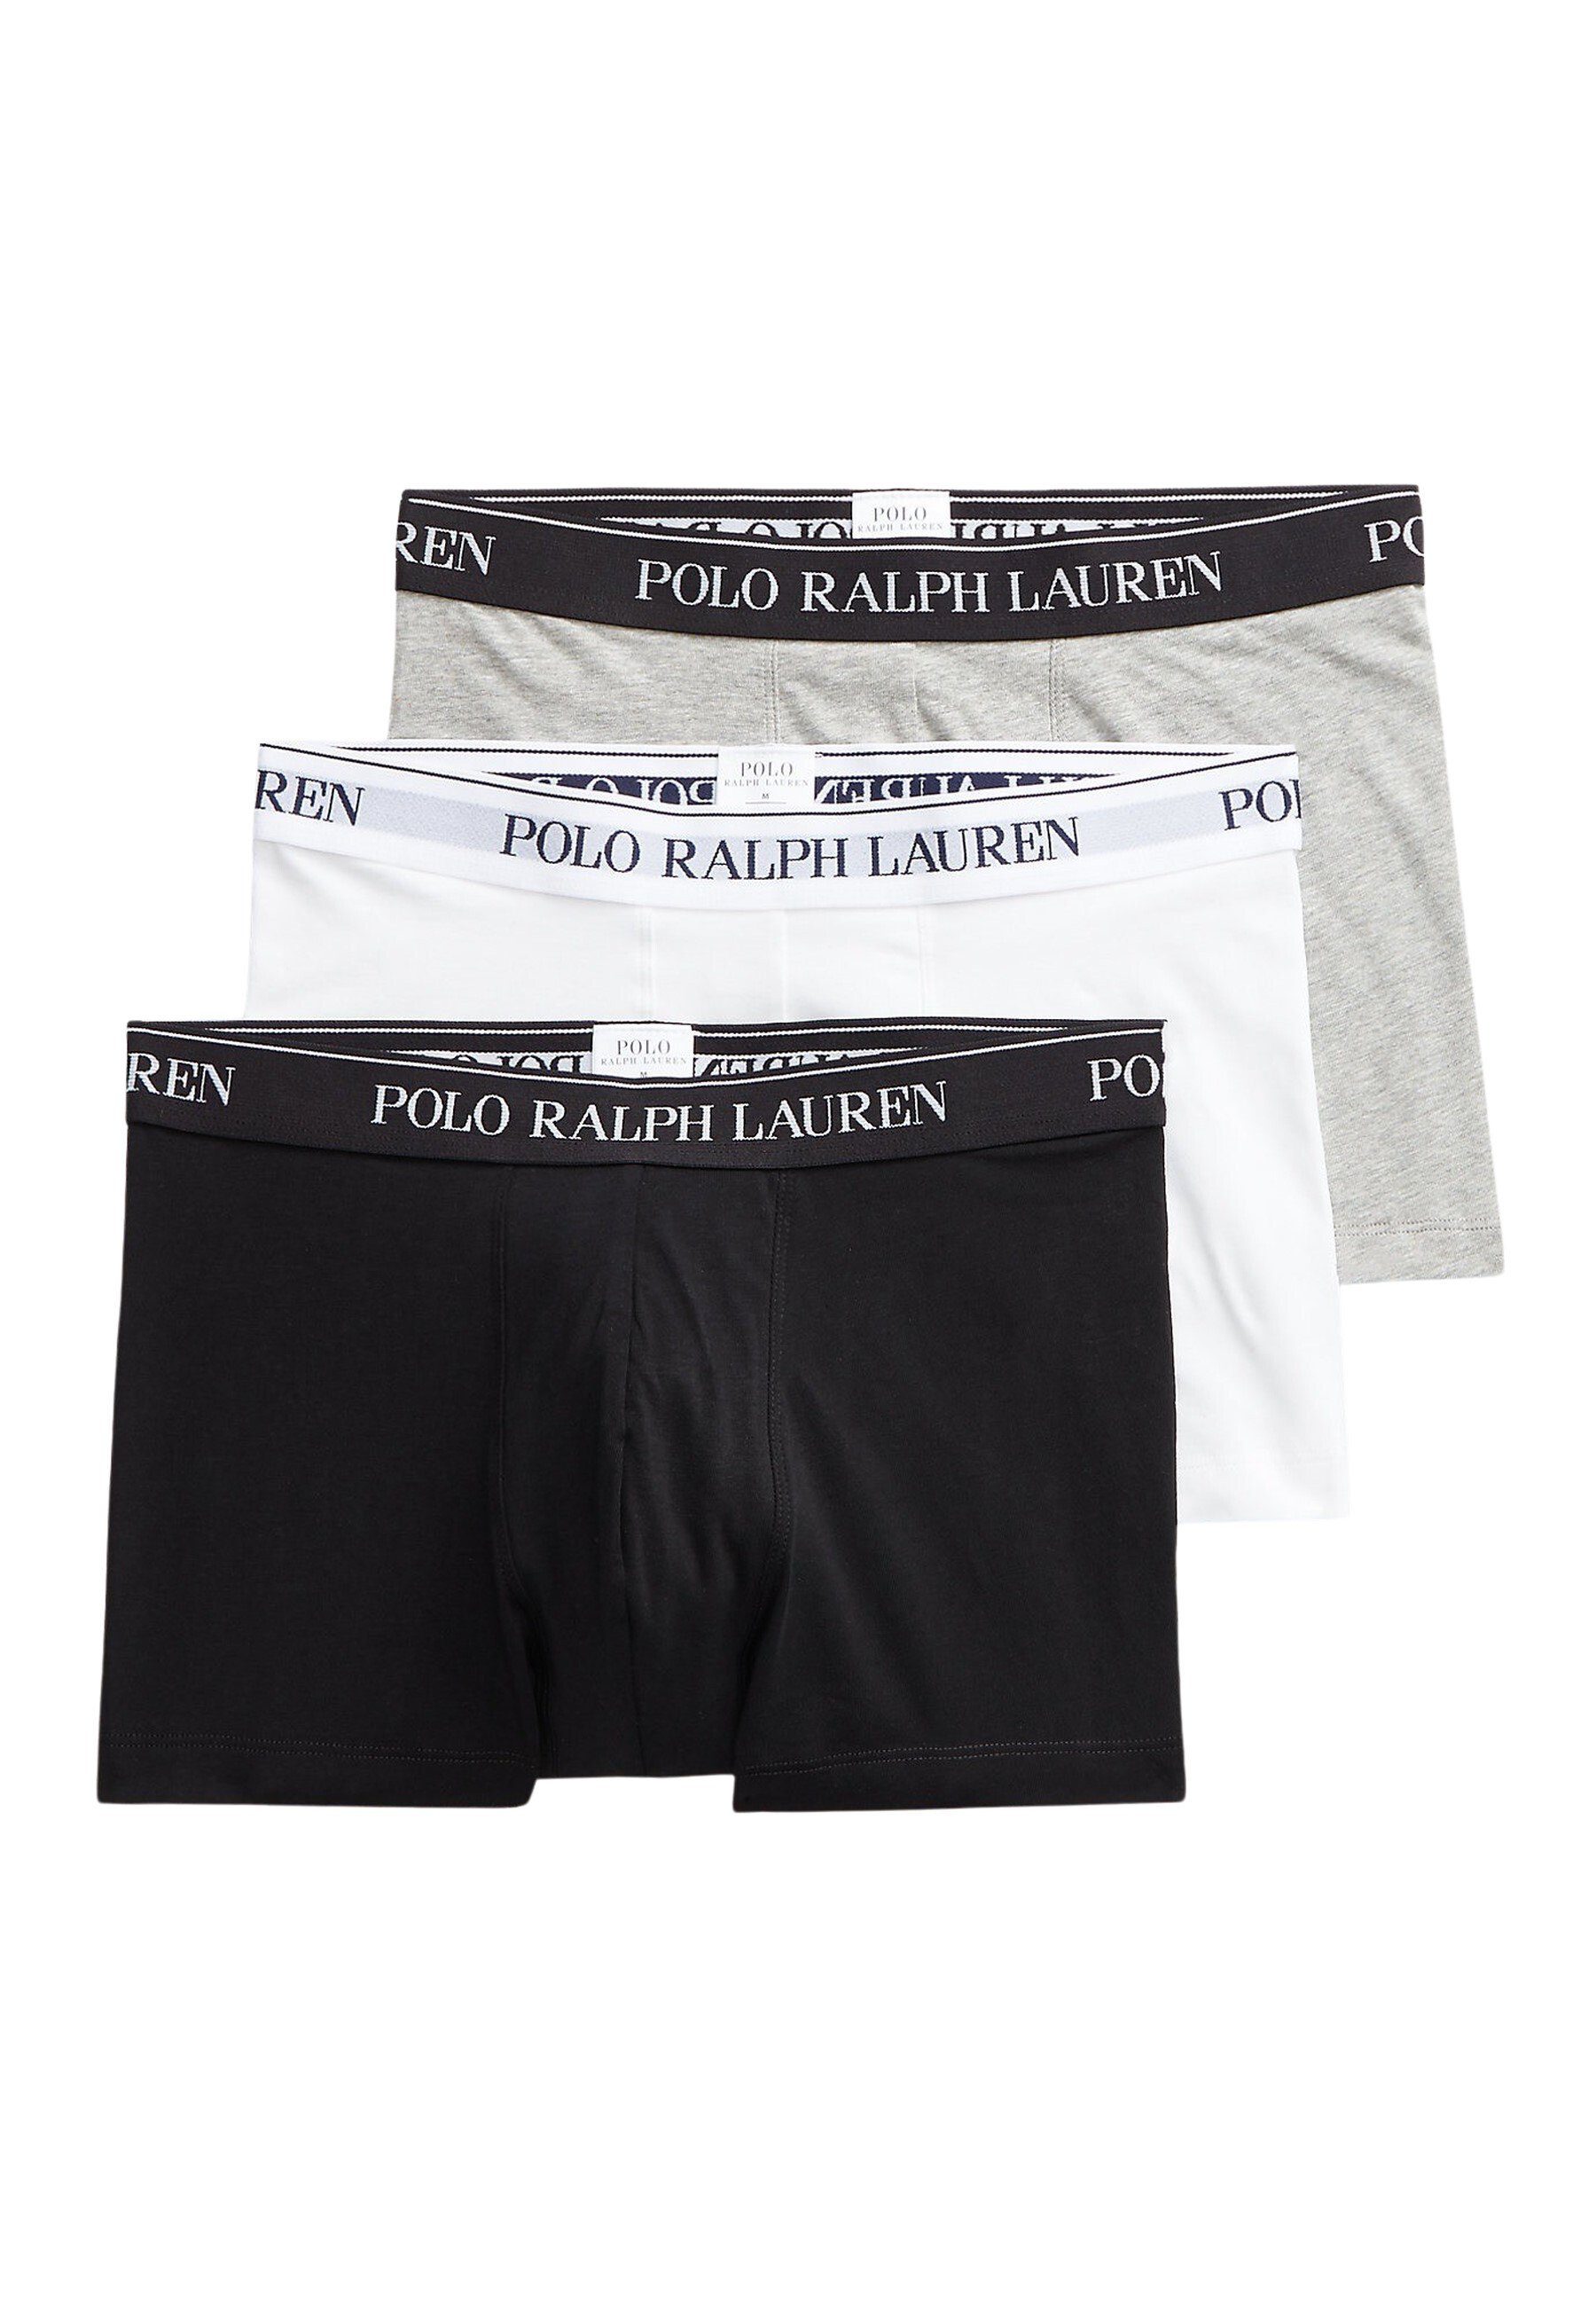 Polo Ralph Lauren Ralph Lauren Boxershorts Boxershorts Basic Trunks Dreierpack (3-St) weiß